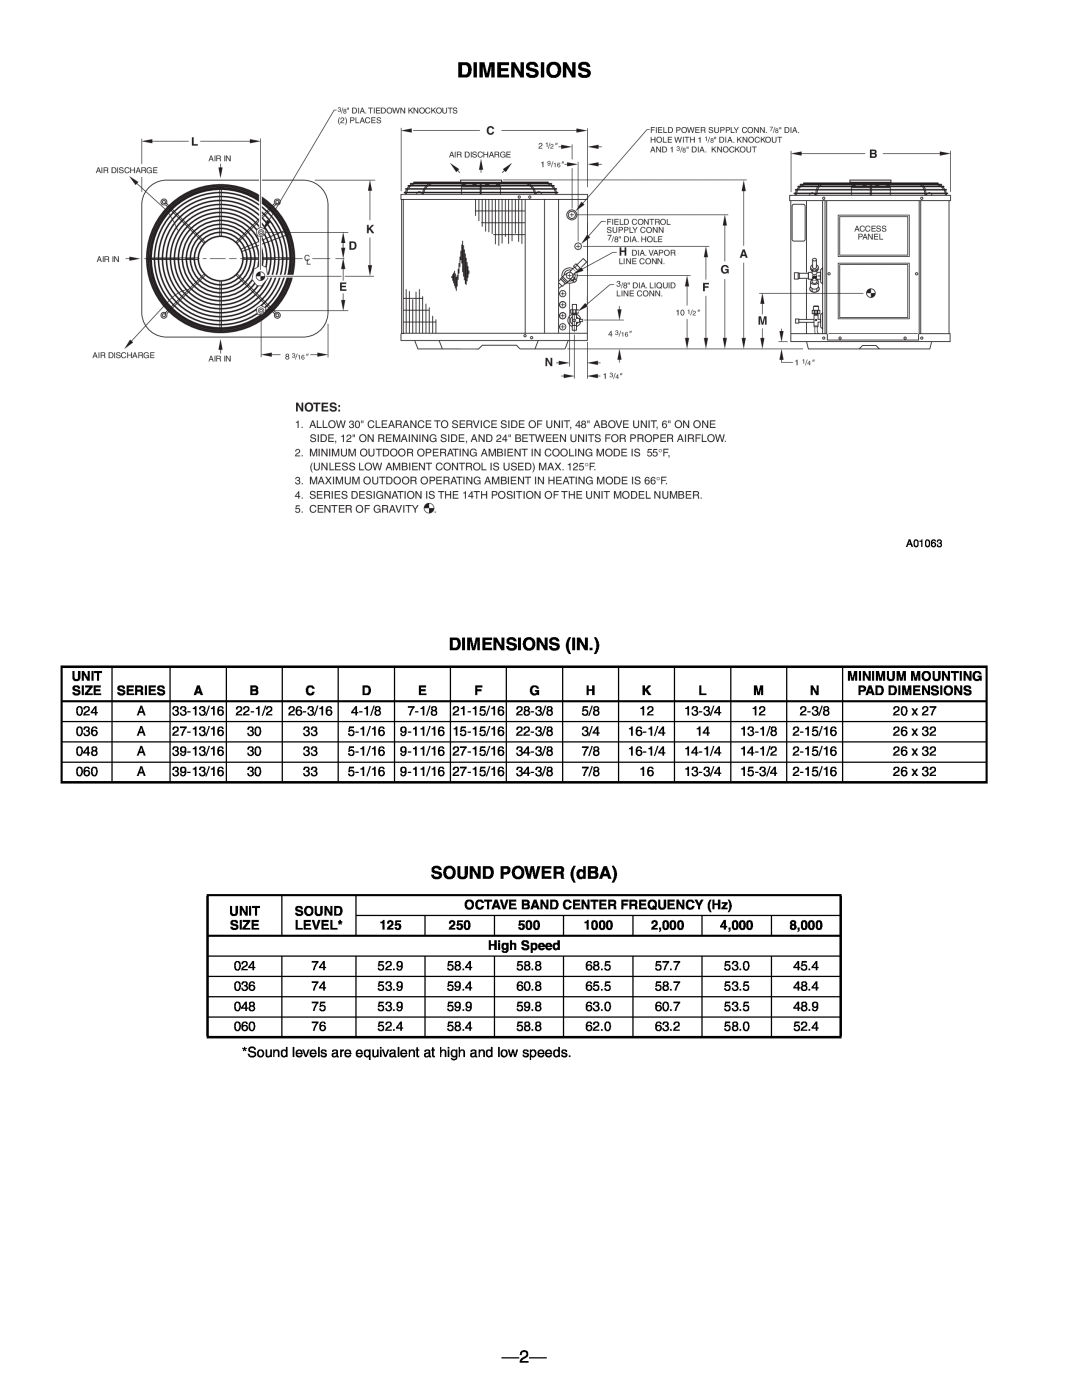 Bryant 698B warranty Dimensions In, SOUND POWER dBA 